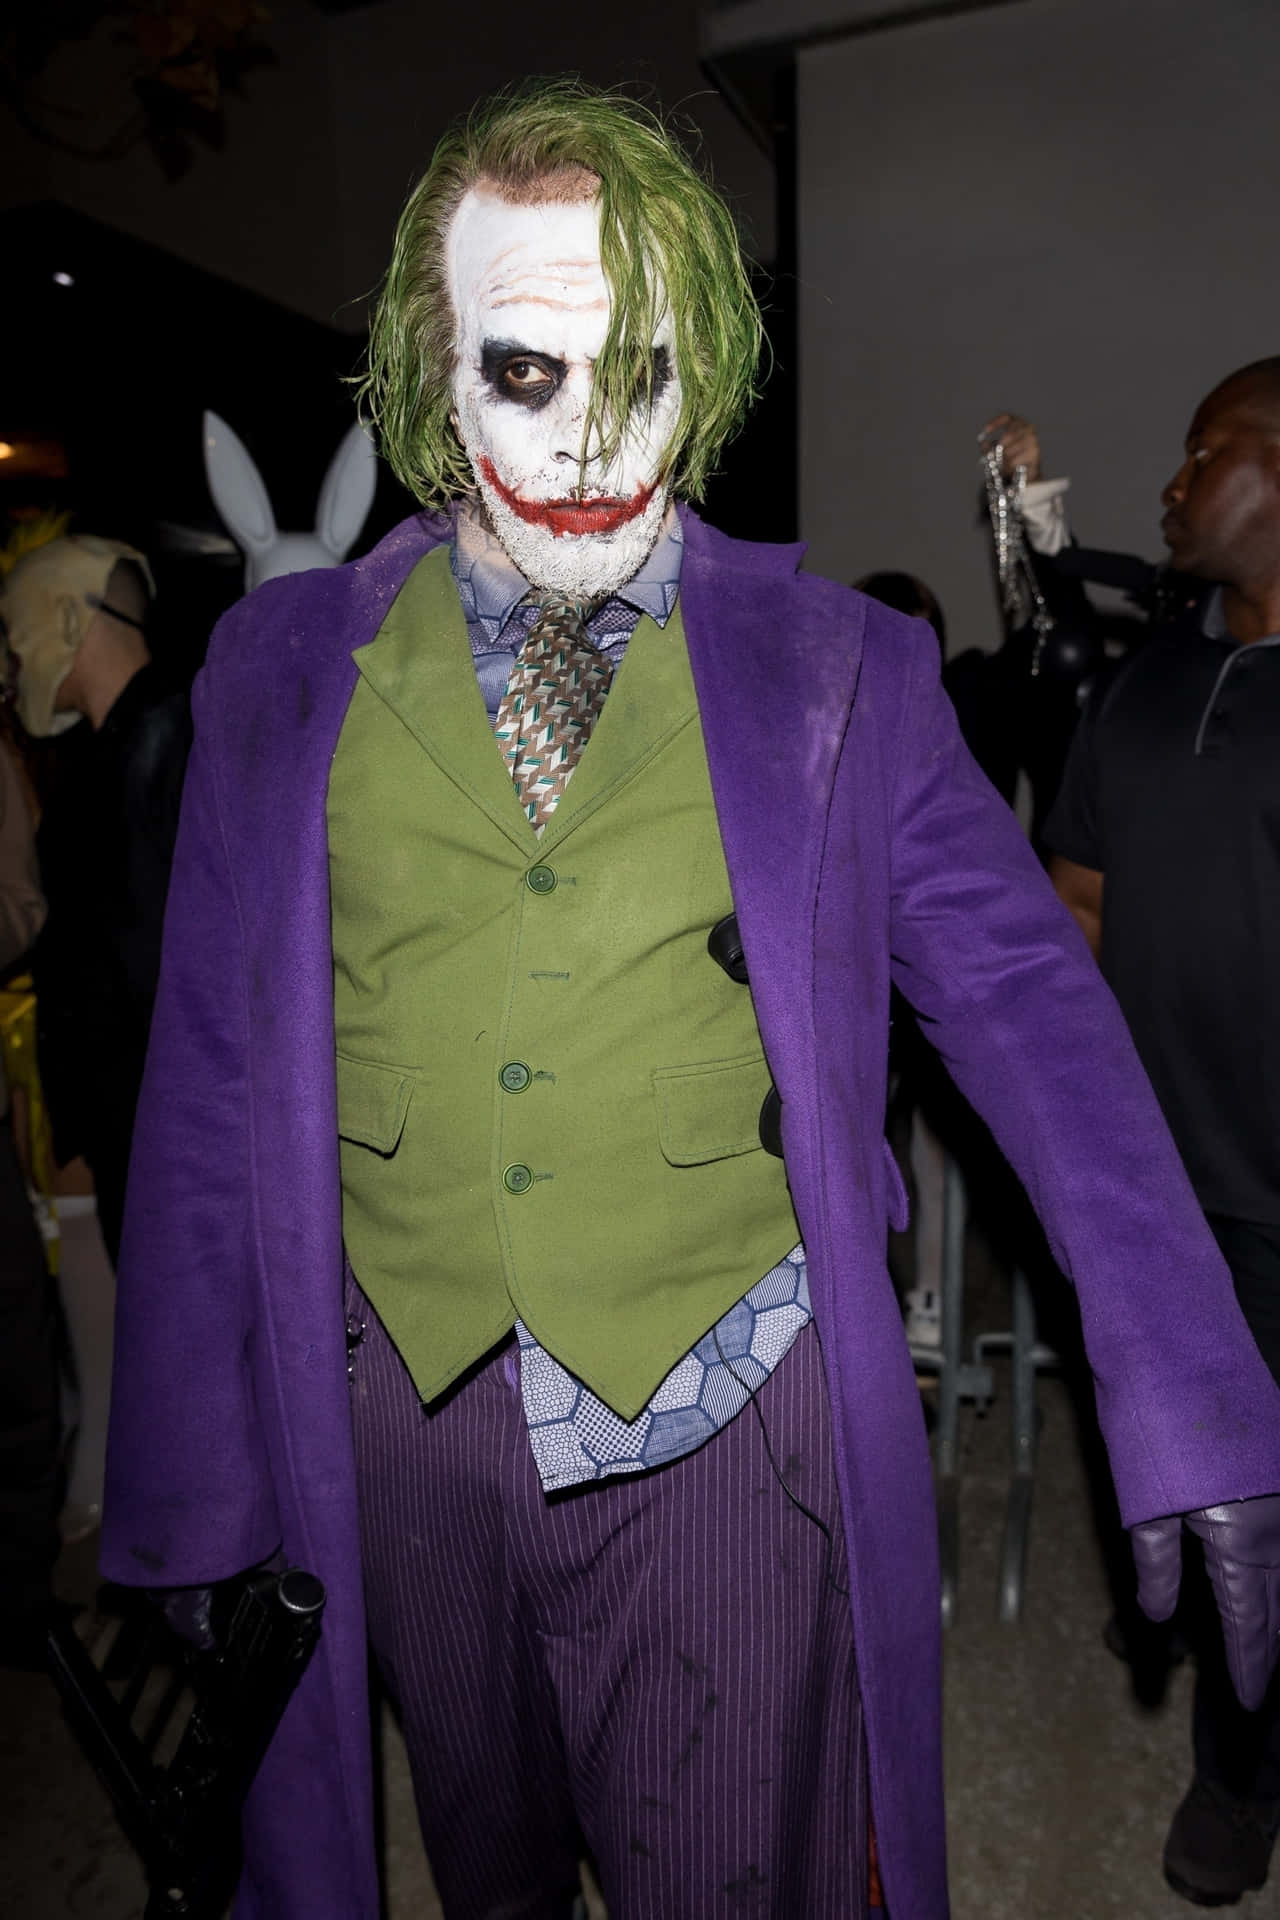 Unuomo Vestito Da Joker